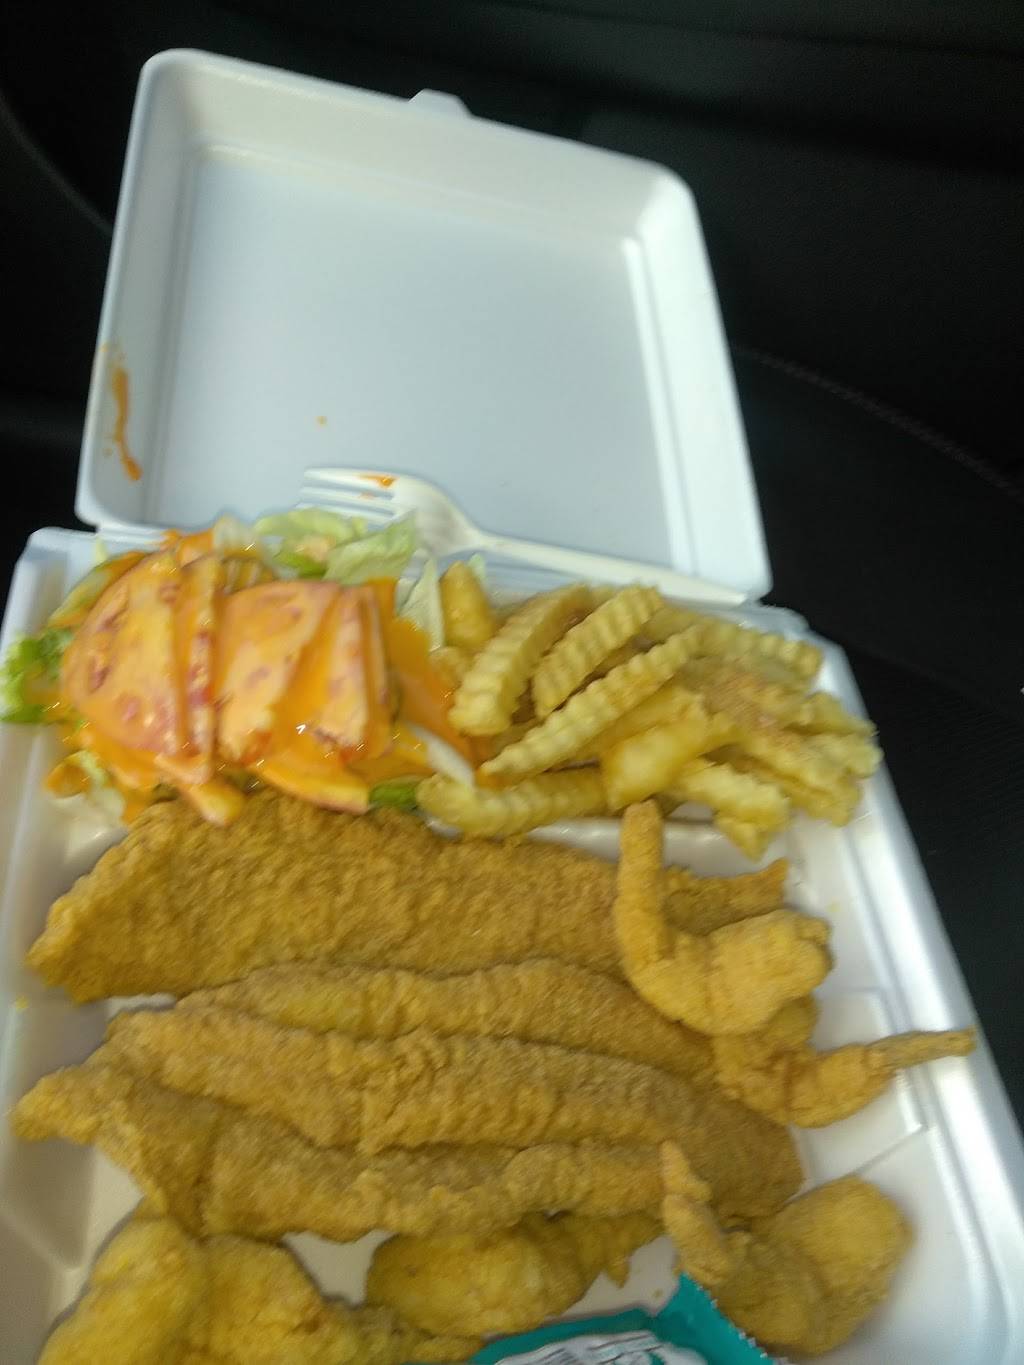 Navy Seafood | restaurant | 7274 Scott St, Houston, TX 77021, USA | 7137474950 OR +1 713-747-4950